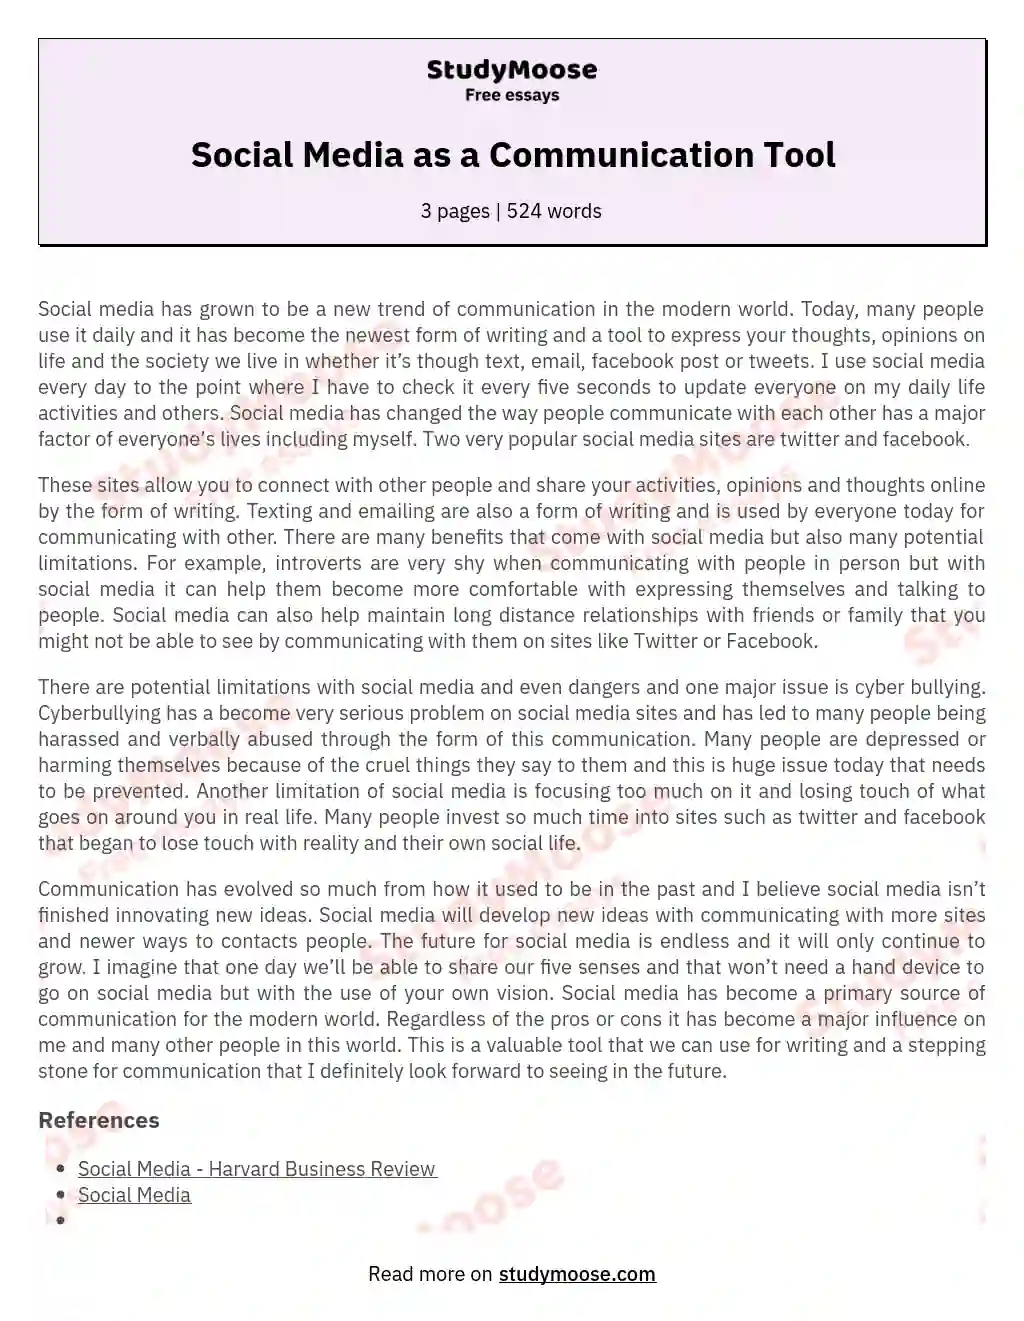 Social Media as a Communication Tool essay